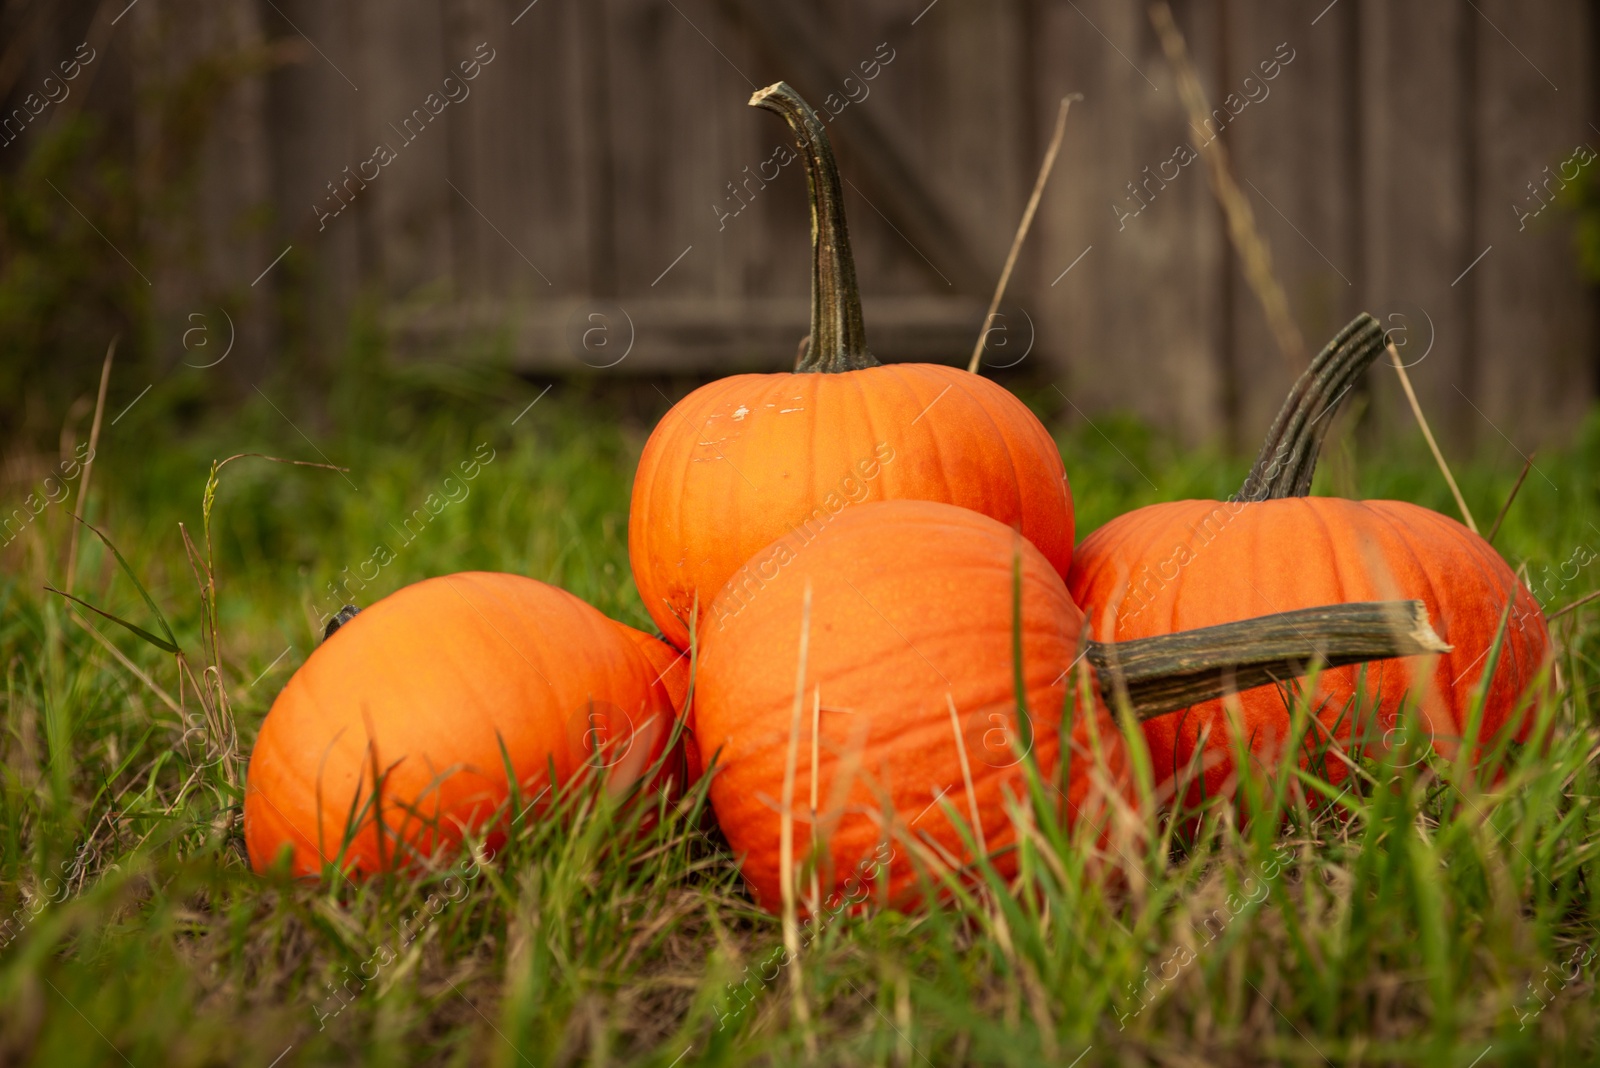 Photo of Many ripe orange pumpkins on green grass in garden